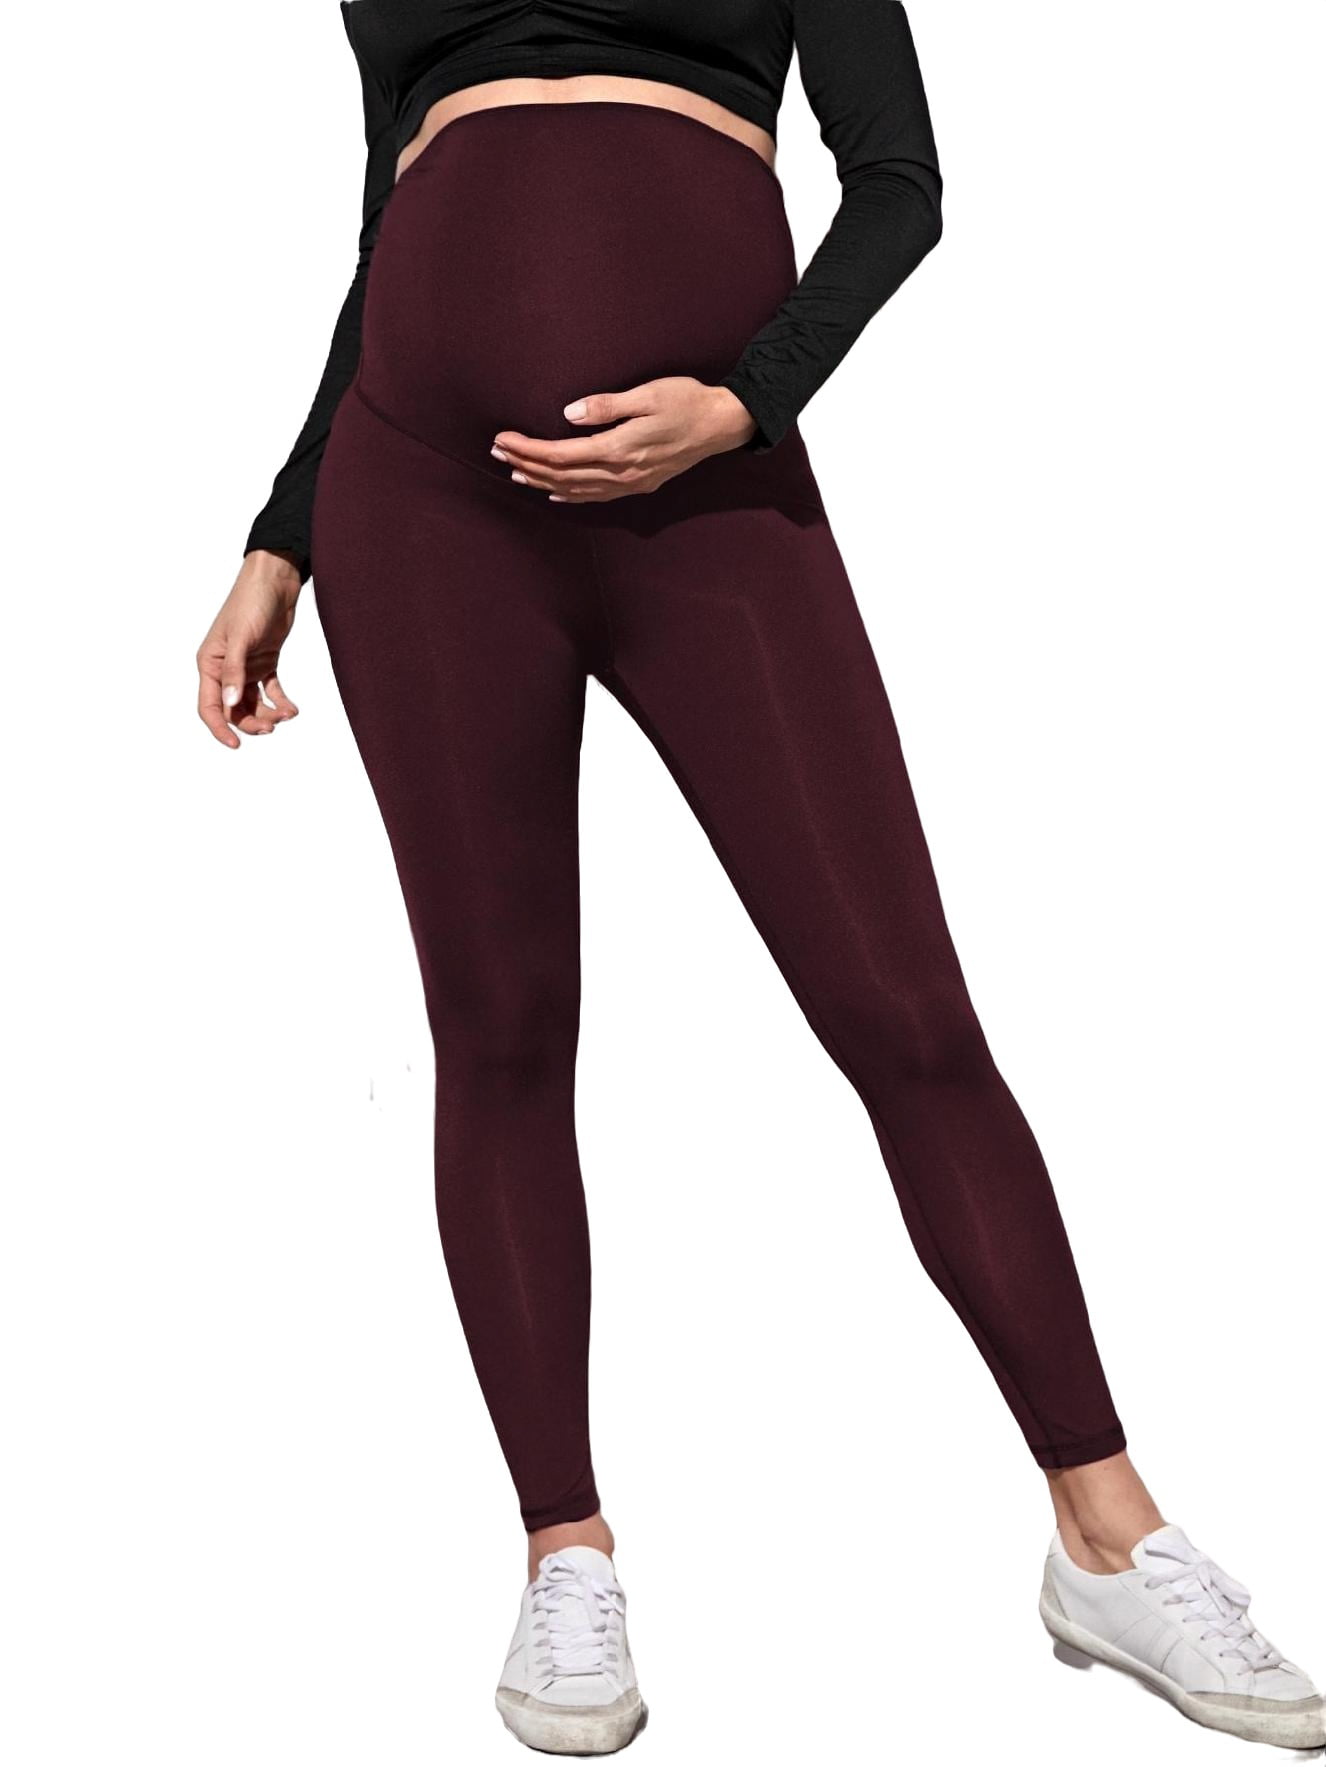 Buy Women's Solid Maroon Ankle Length Maternity Leggings Online